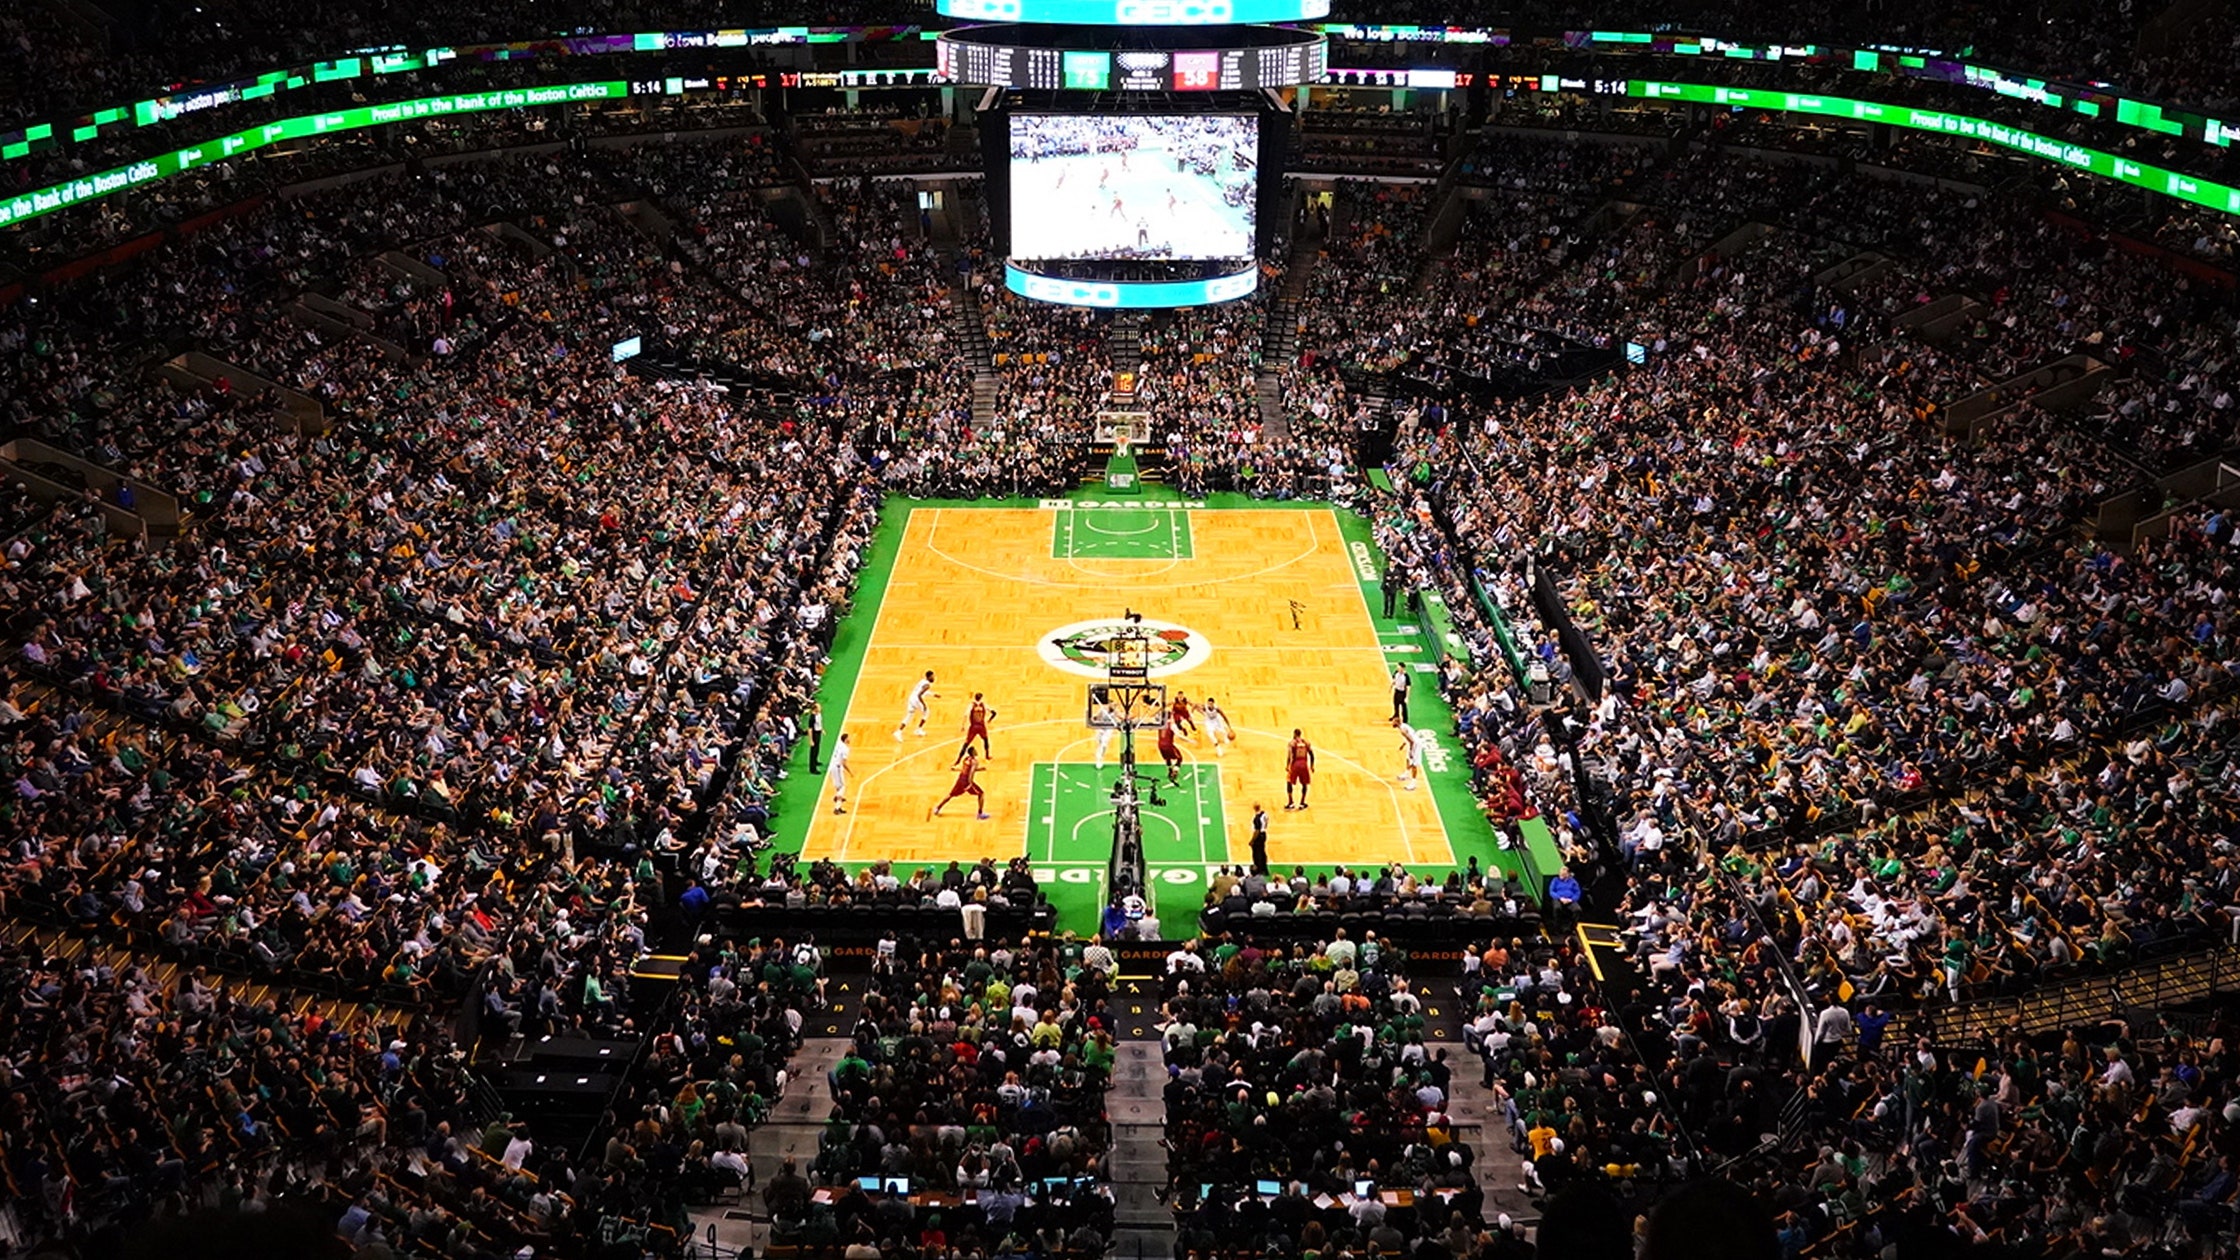 2023 Boston Celtics Basketball Game Ticket at TD Garden